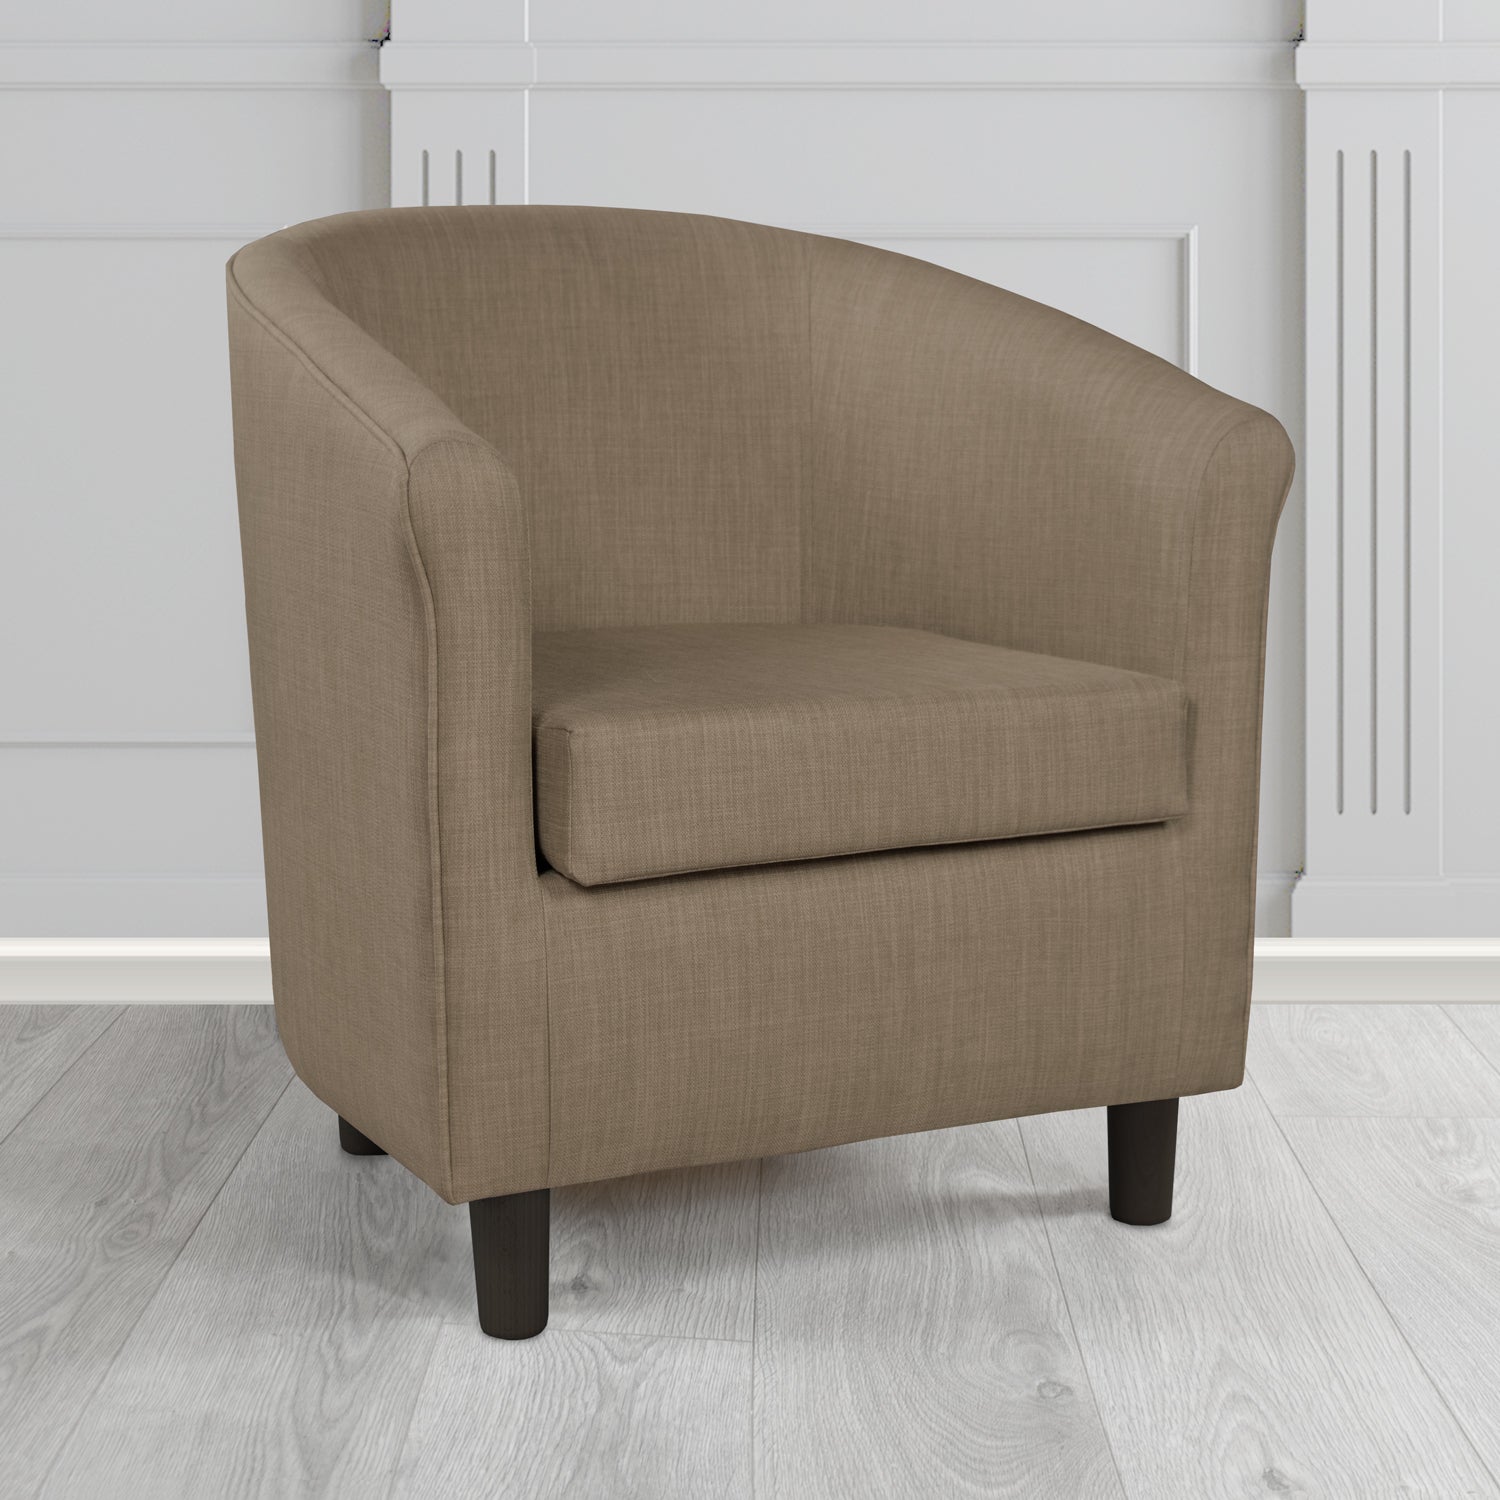 Tuscany Charles Nutmeg Plain Linen Fabric Tub Chair - The Tub Chair Shop